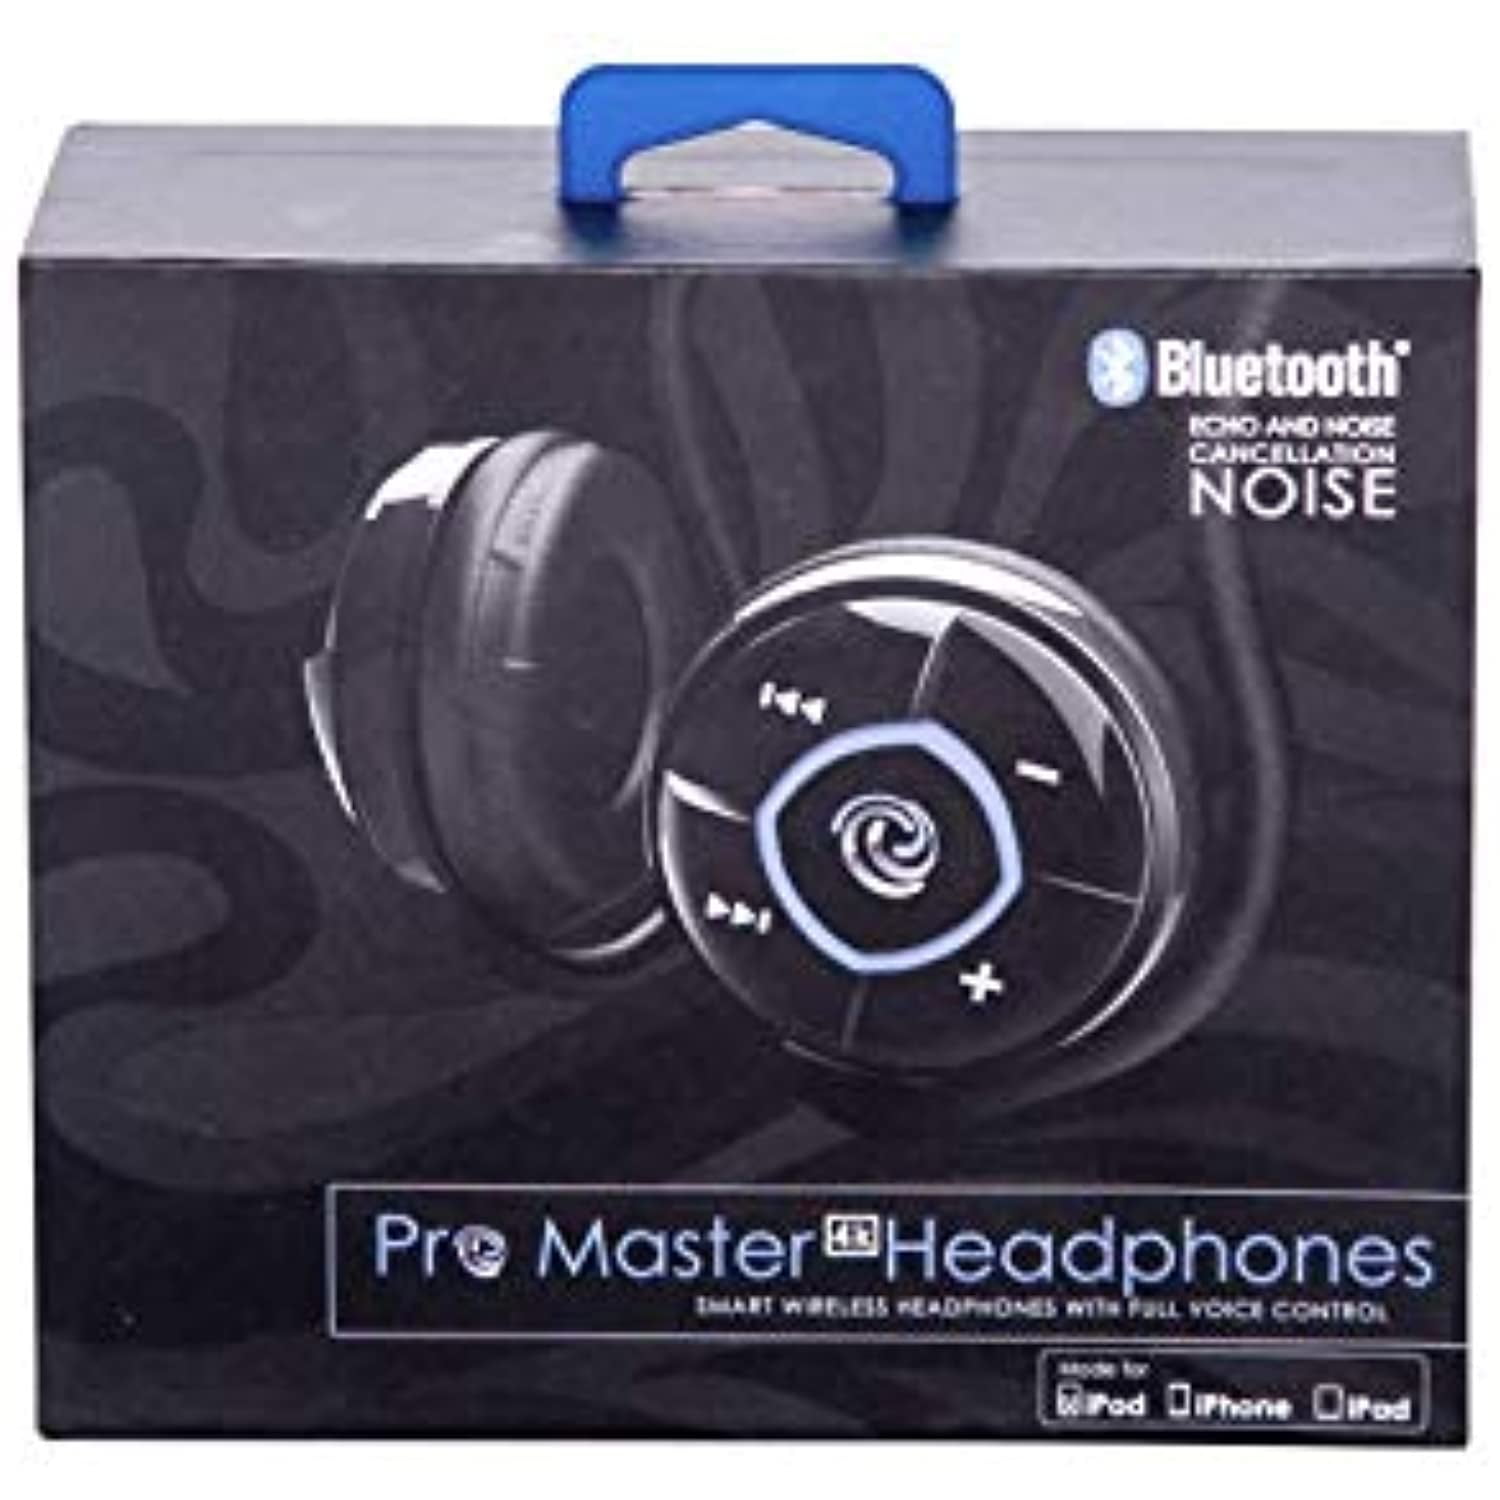 Pro master 4K headphone